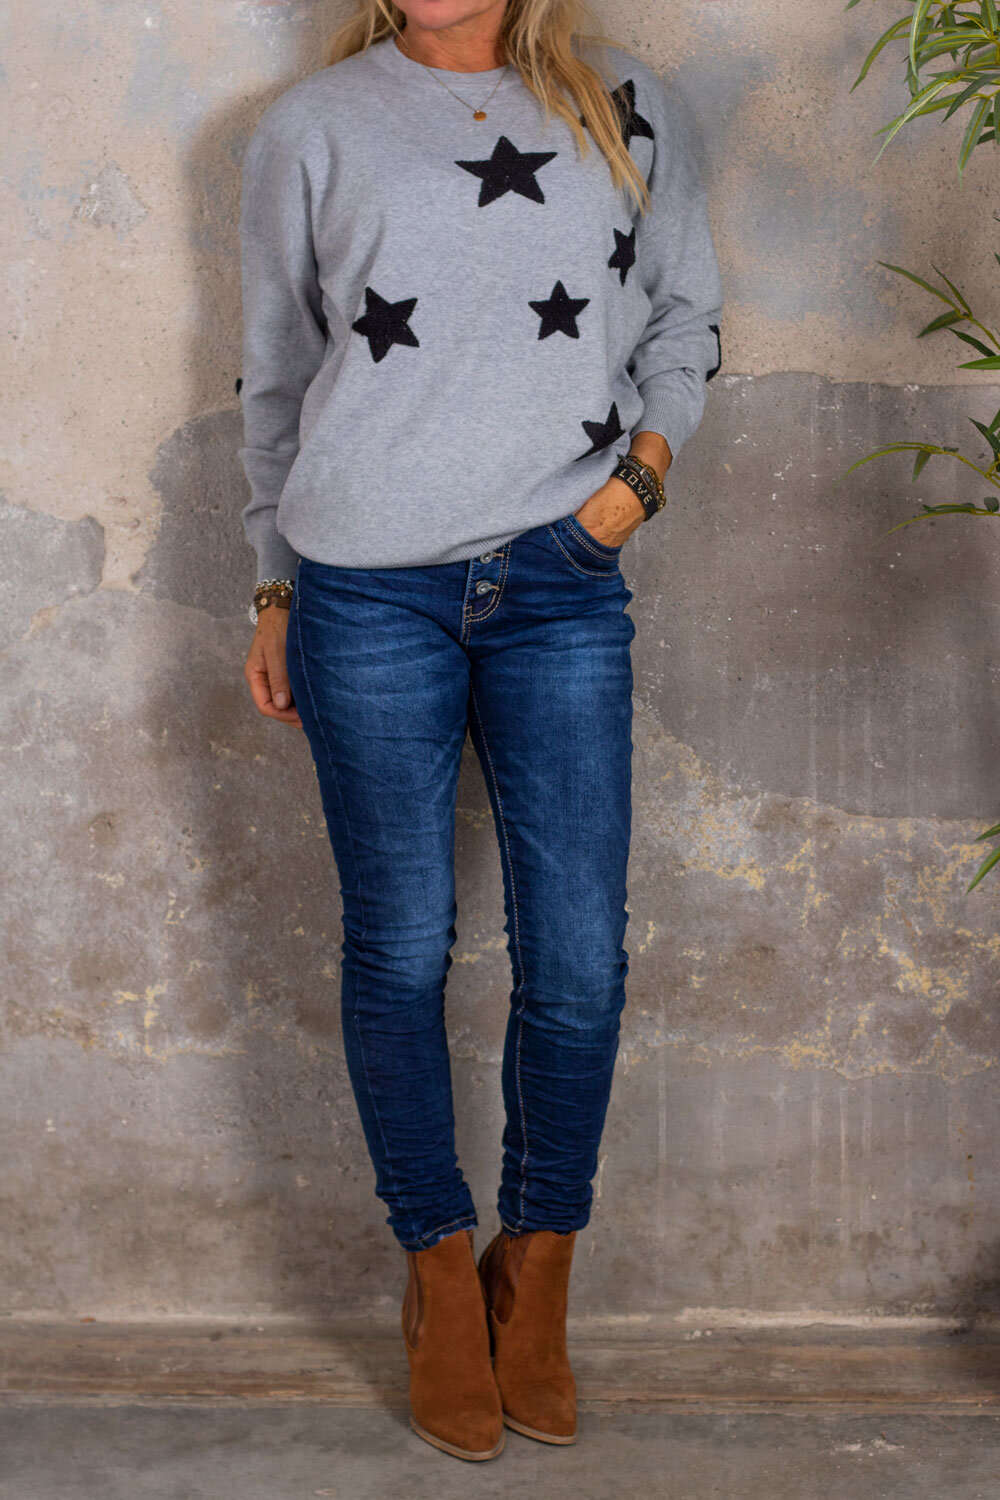 Matilda Sweater - Stars - Grey